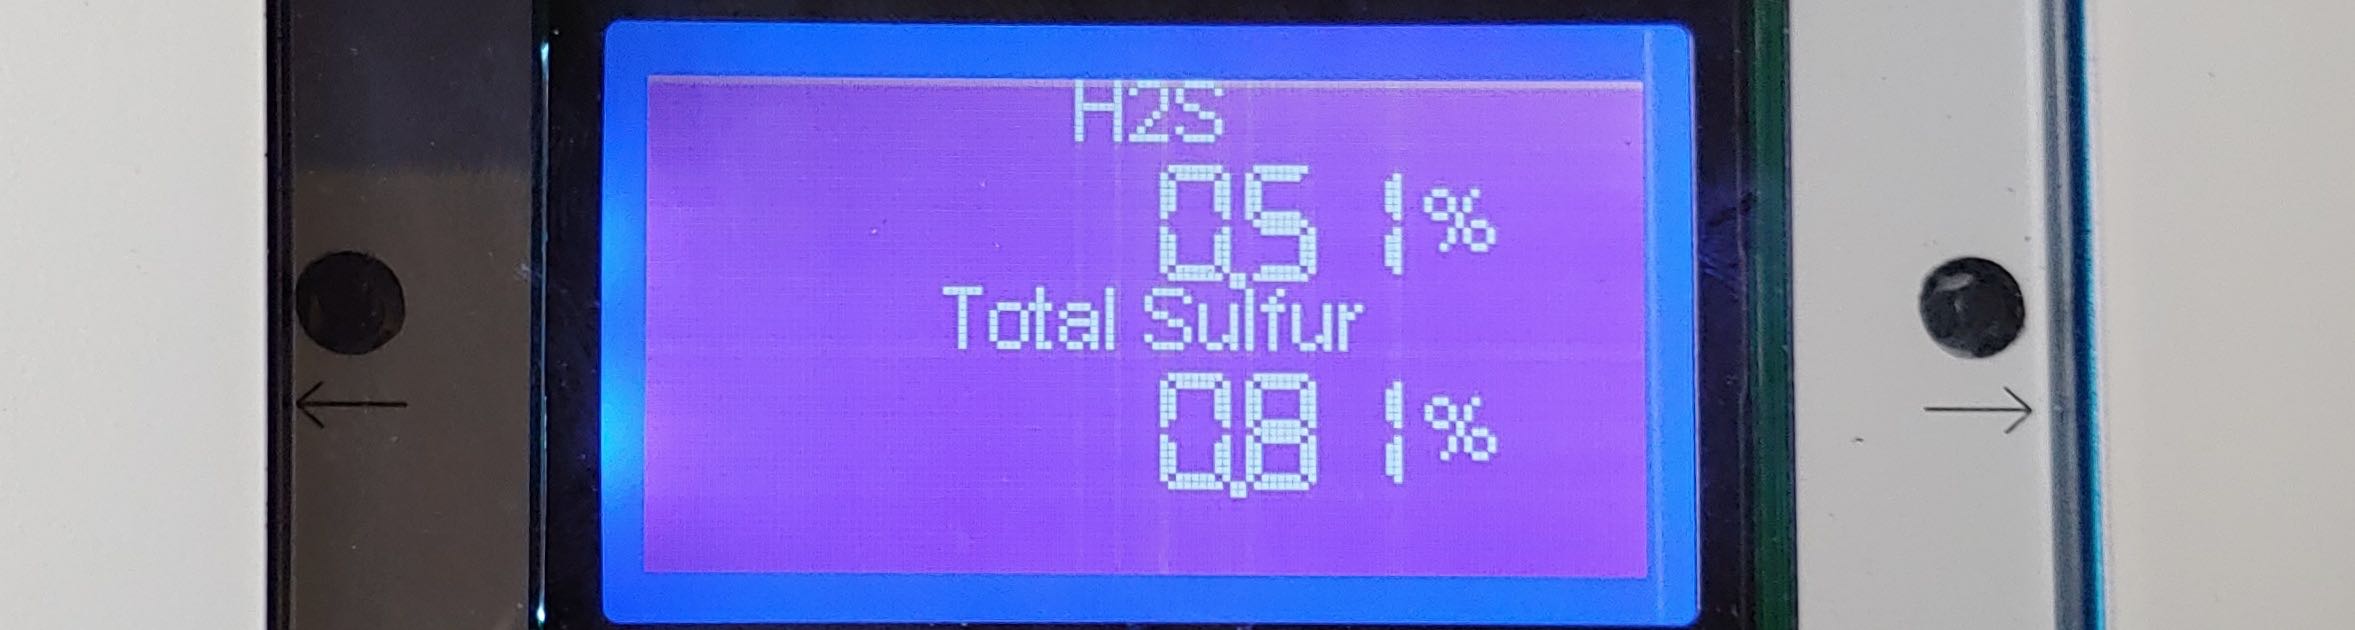 Total Sulfur Analyzer Screen